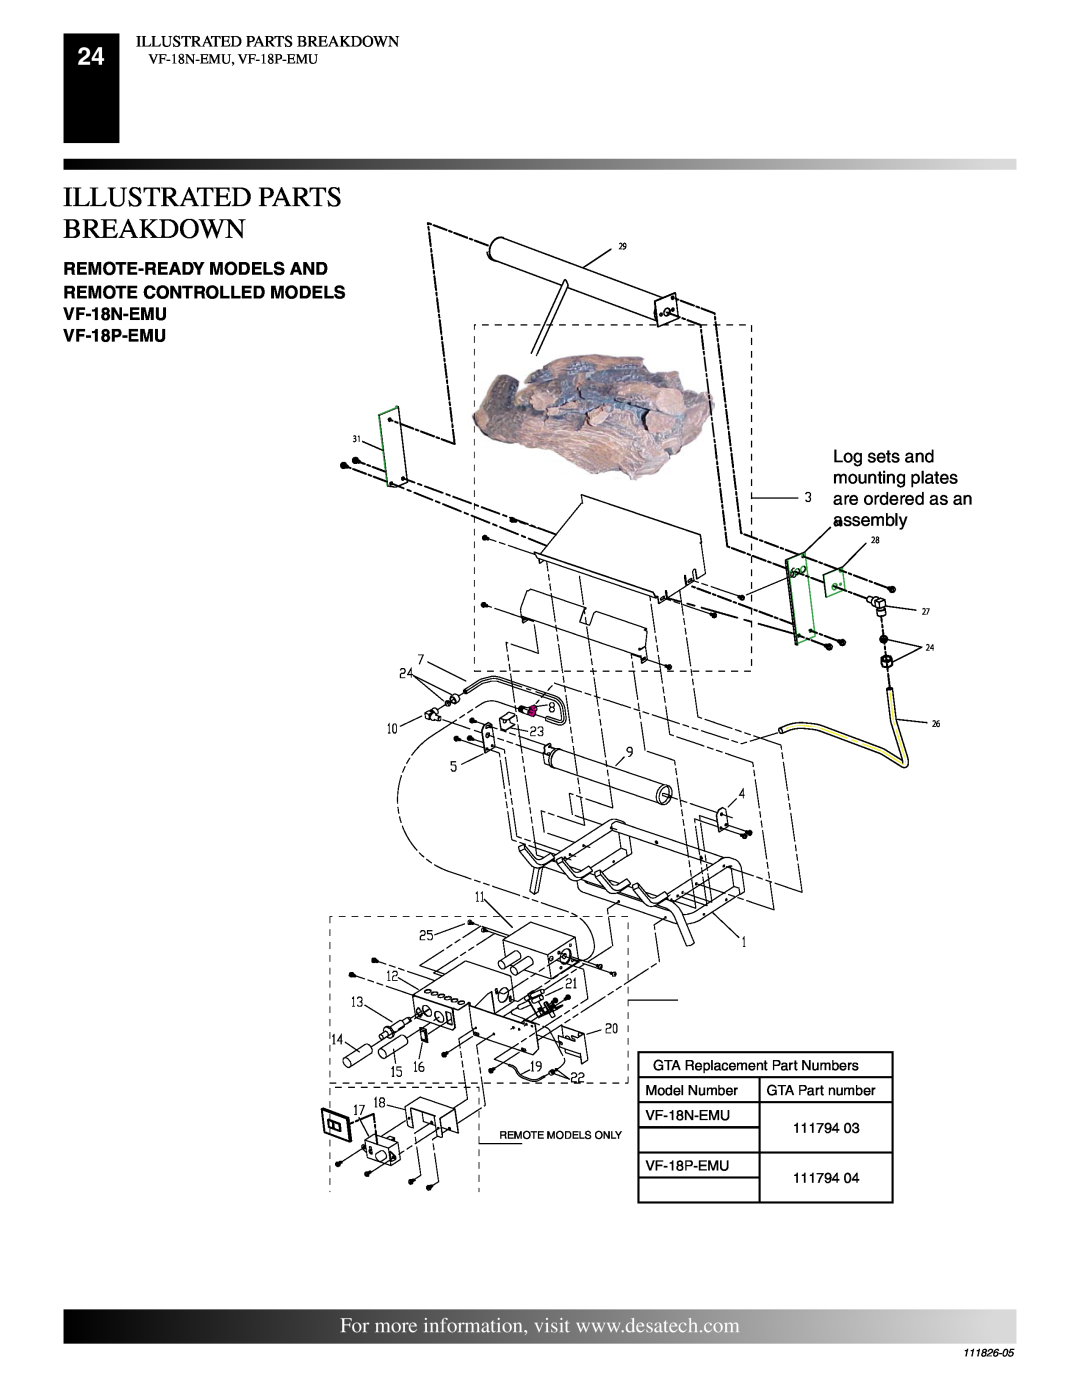 Desa VF-24P-EMU, VF-24N-EMU Illustrated Parts Breakdown, VF-18N-EMU, VF-18P-EMU, Remote Models Only, 111826-05 